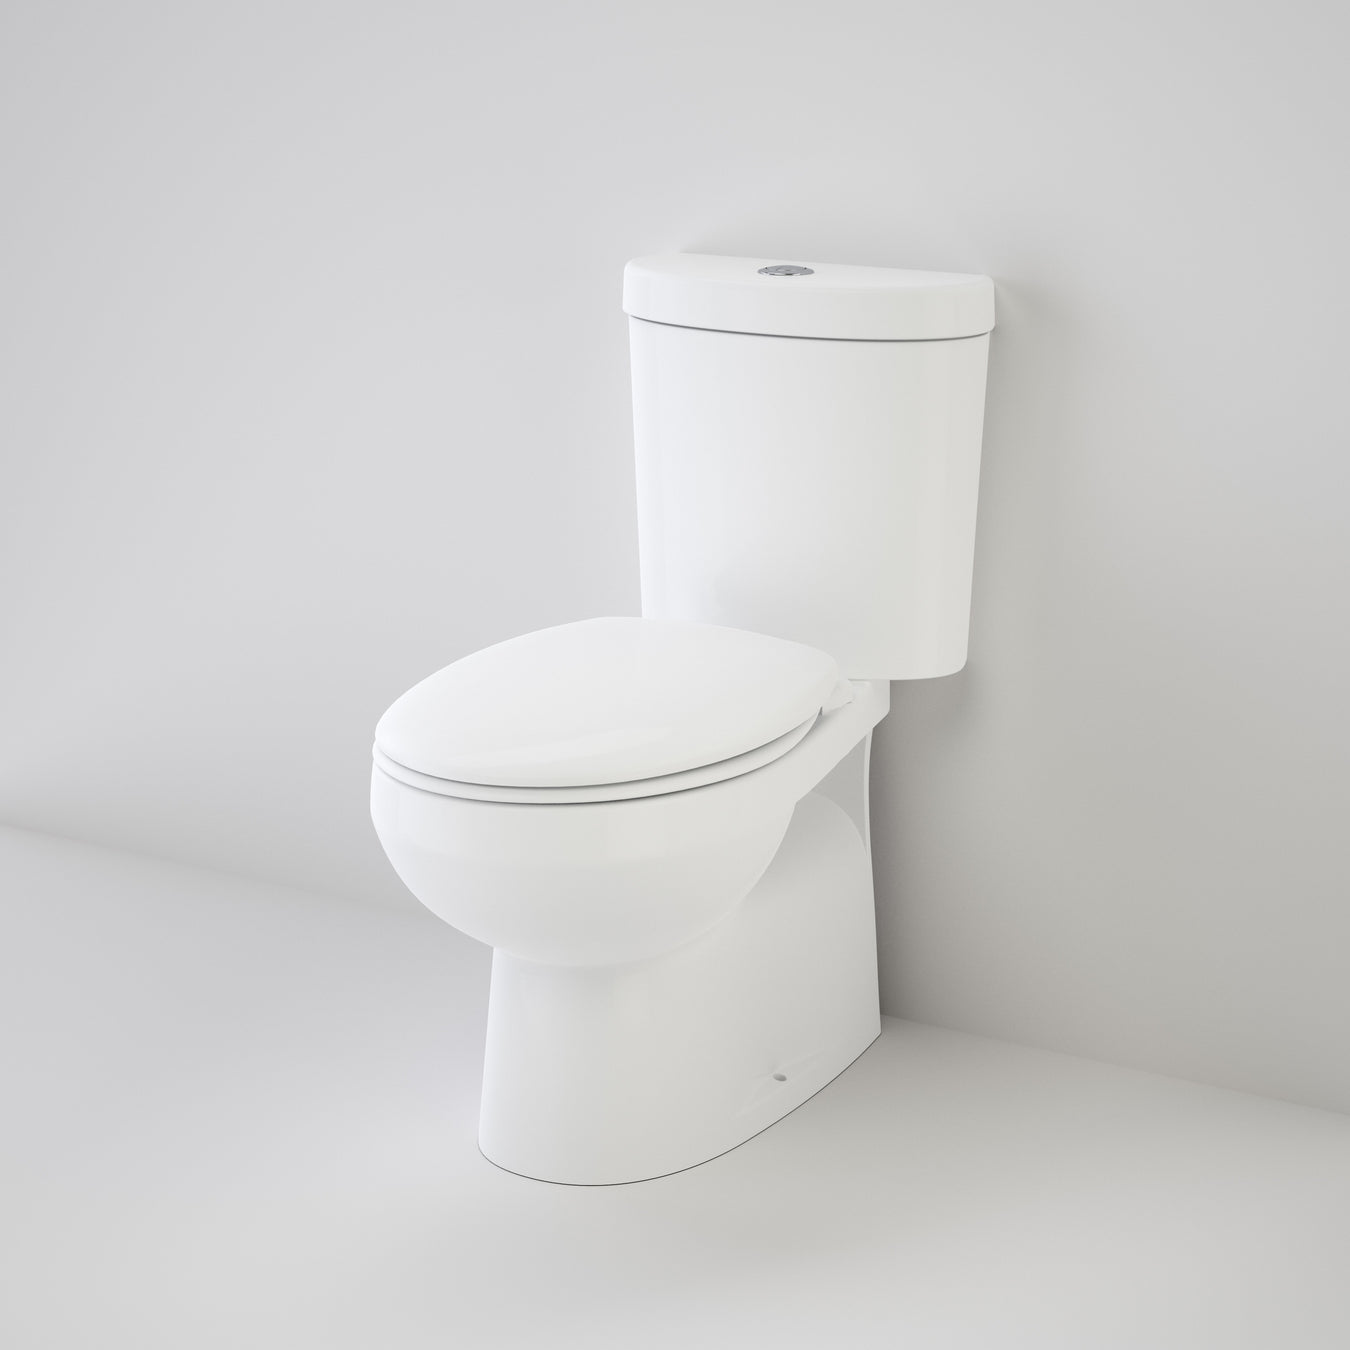 Close Coupled Toilets